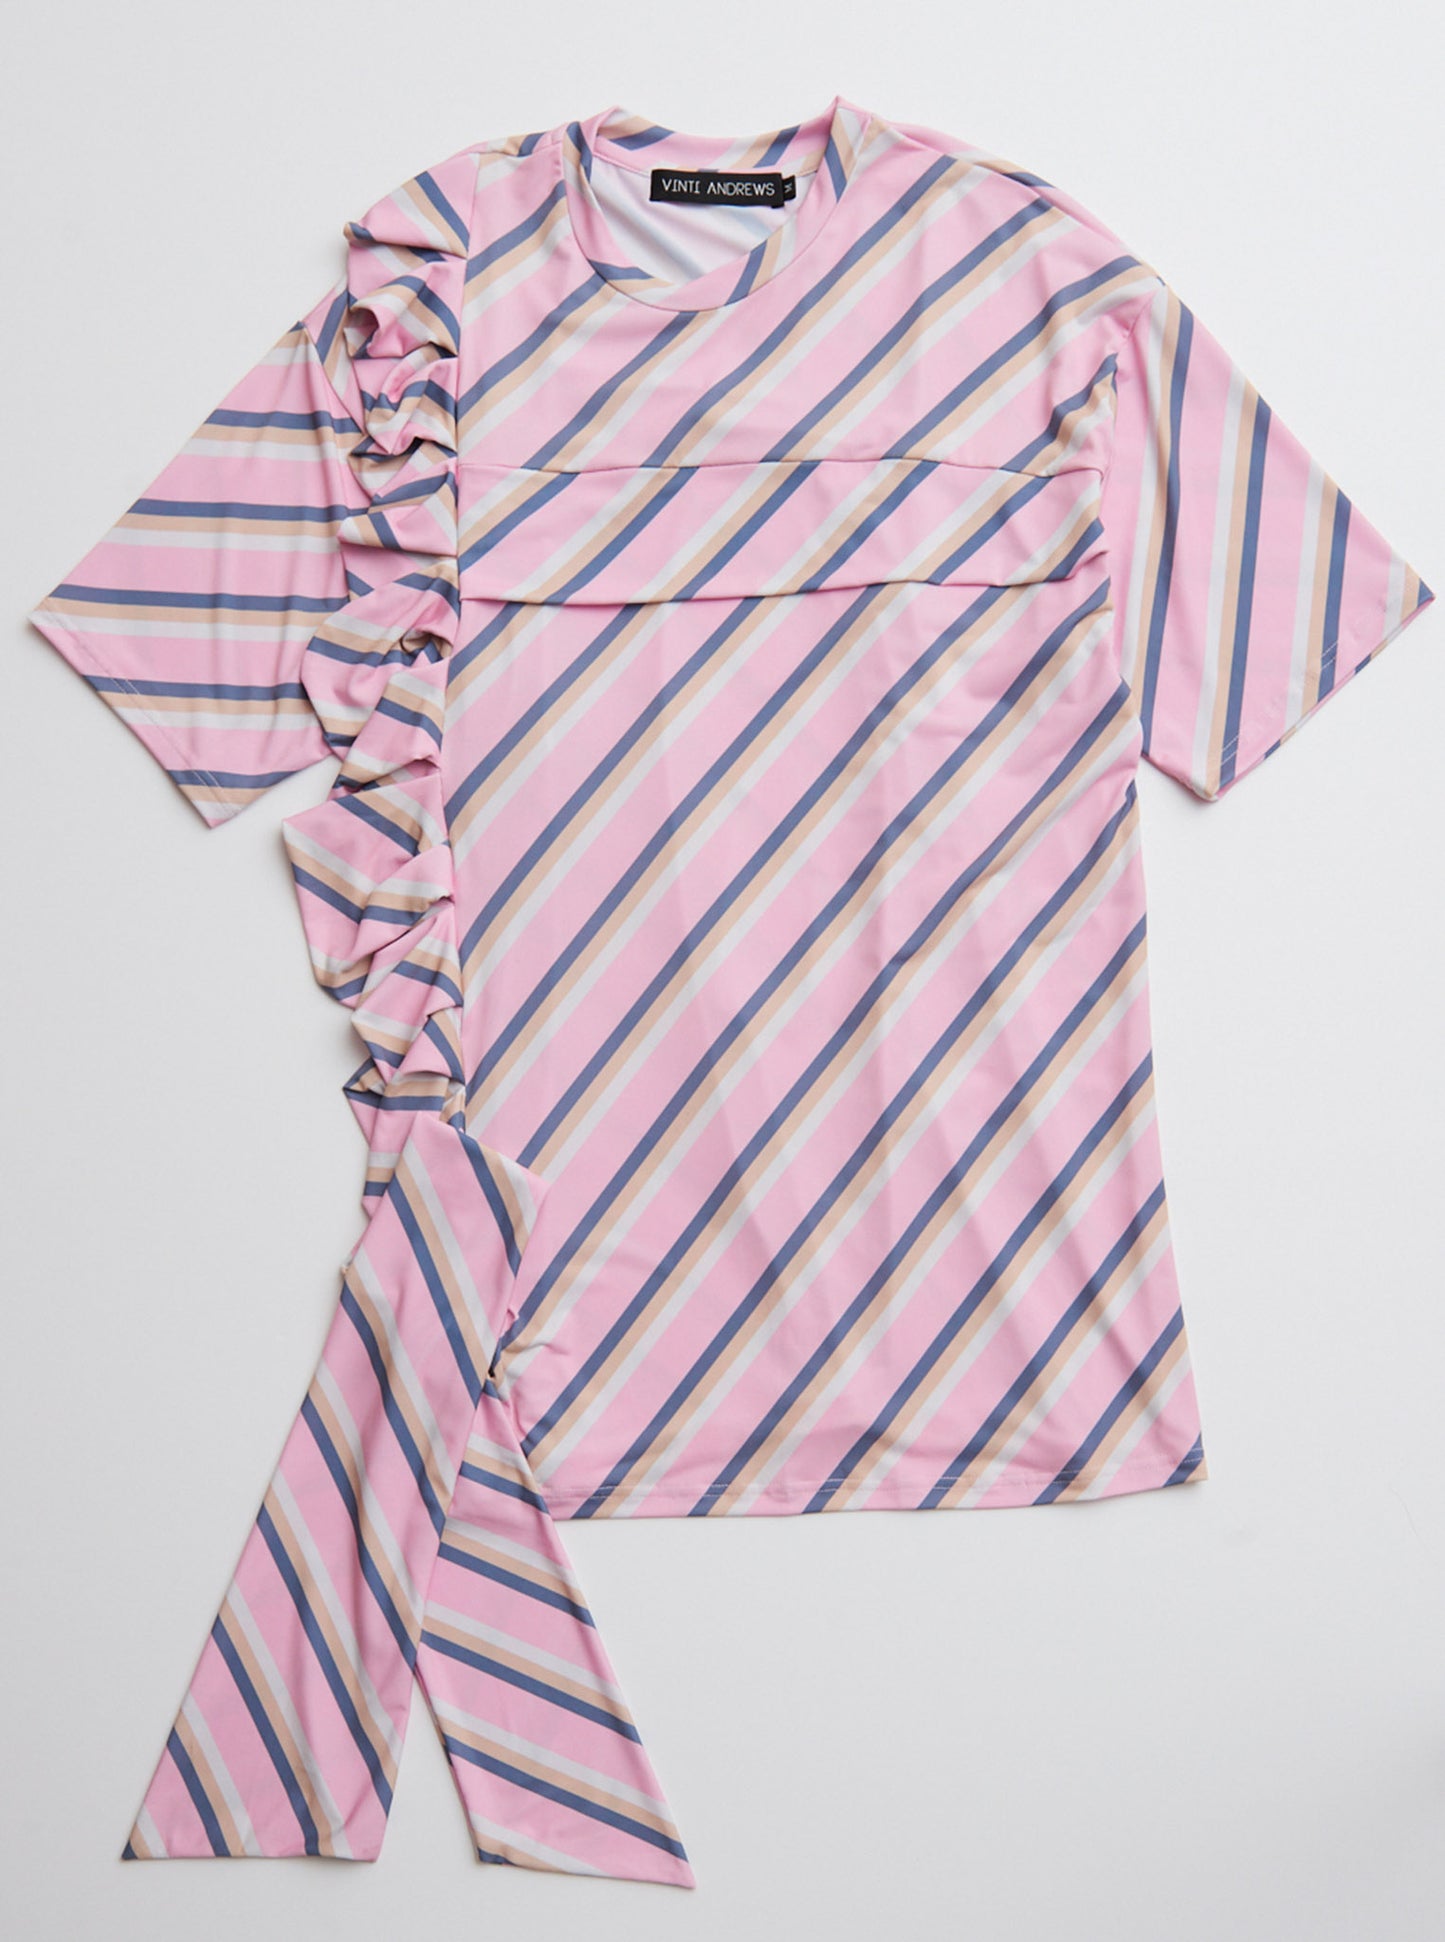 Vinti Andrews Frill T-Shirt Dress Pink